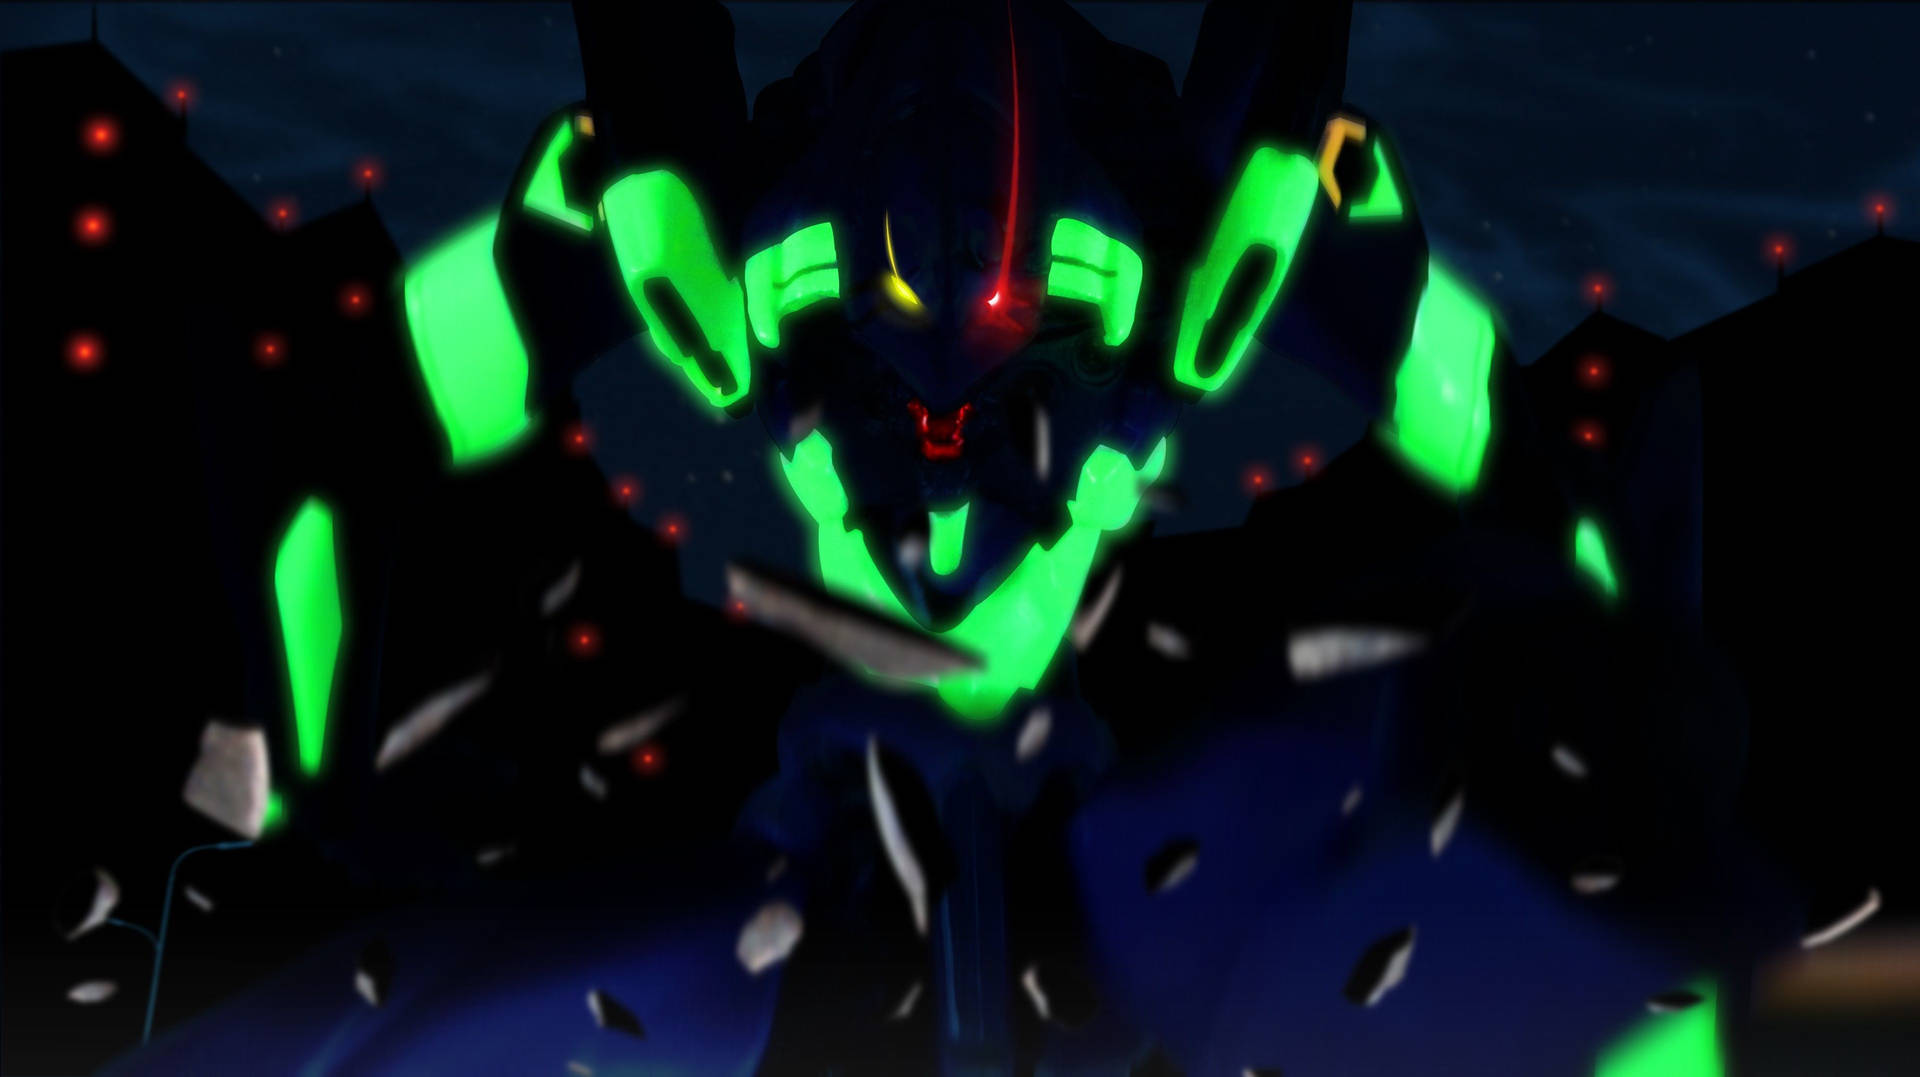 Shinji Ikari and the Evangelion Unit 01 battle an enemy Wallpaper